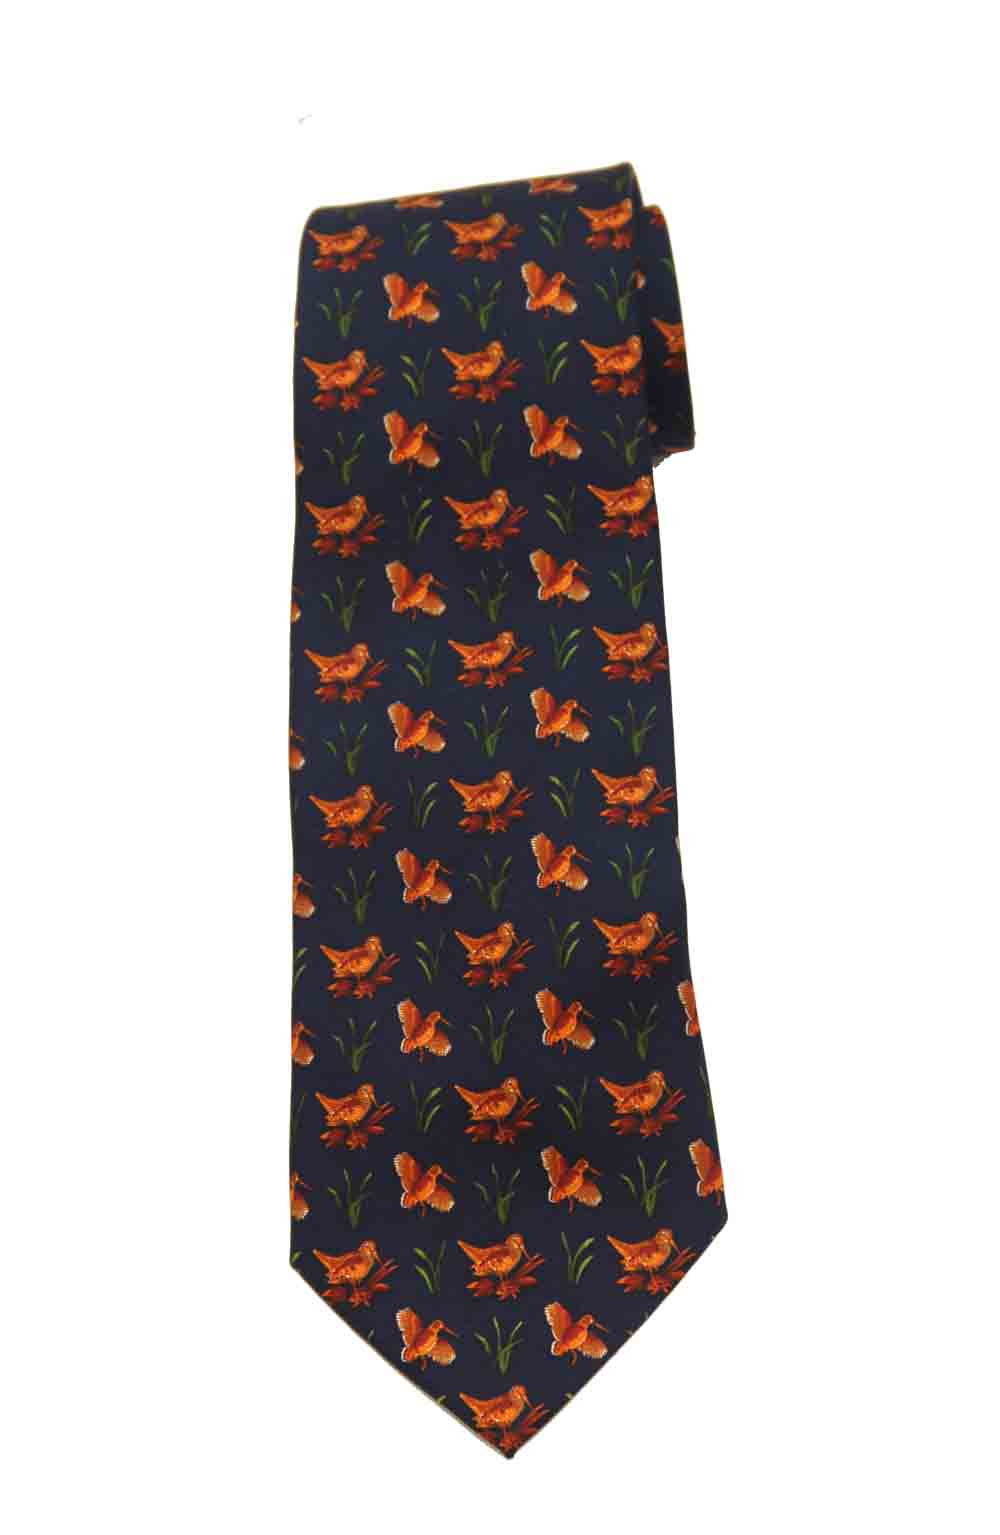 Polo by Ralph Lauren Italian Silk Tie Navy Blue Brown Orange Birds Pattern